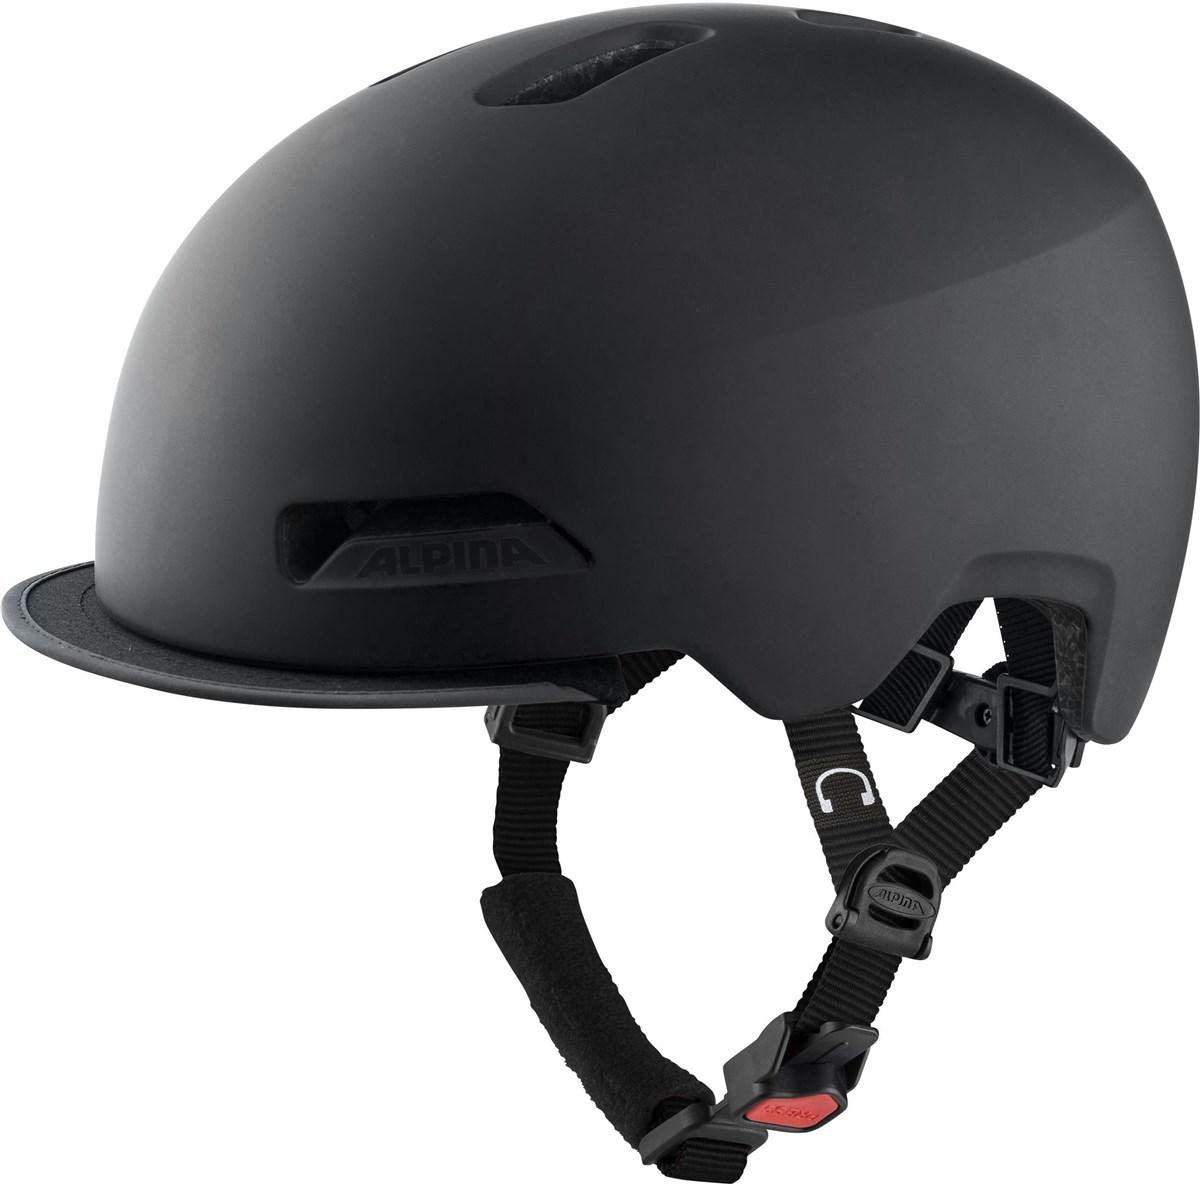 Alpina Brooklyn Road Cycling Helmet product image